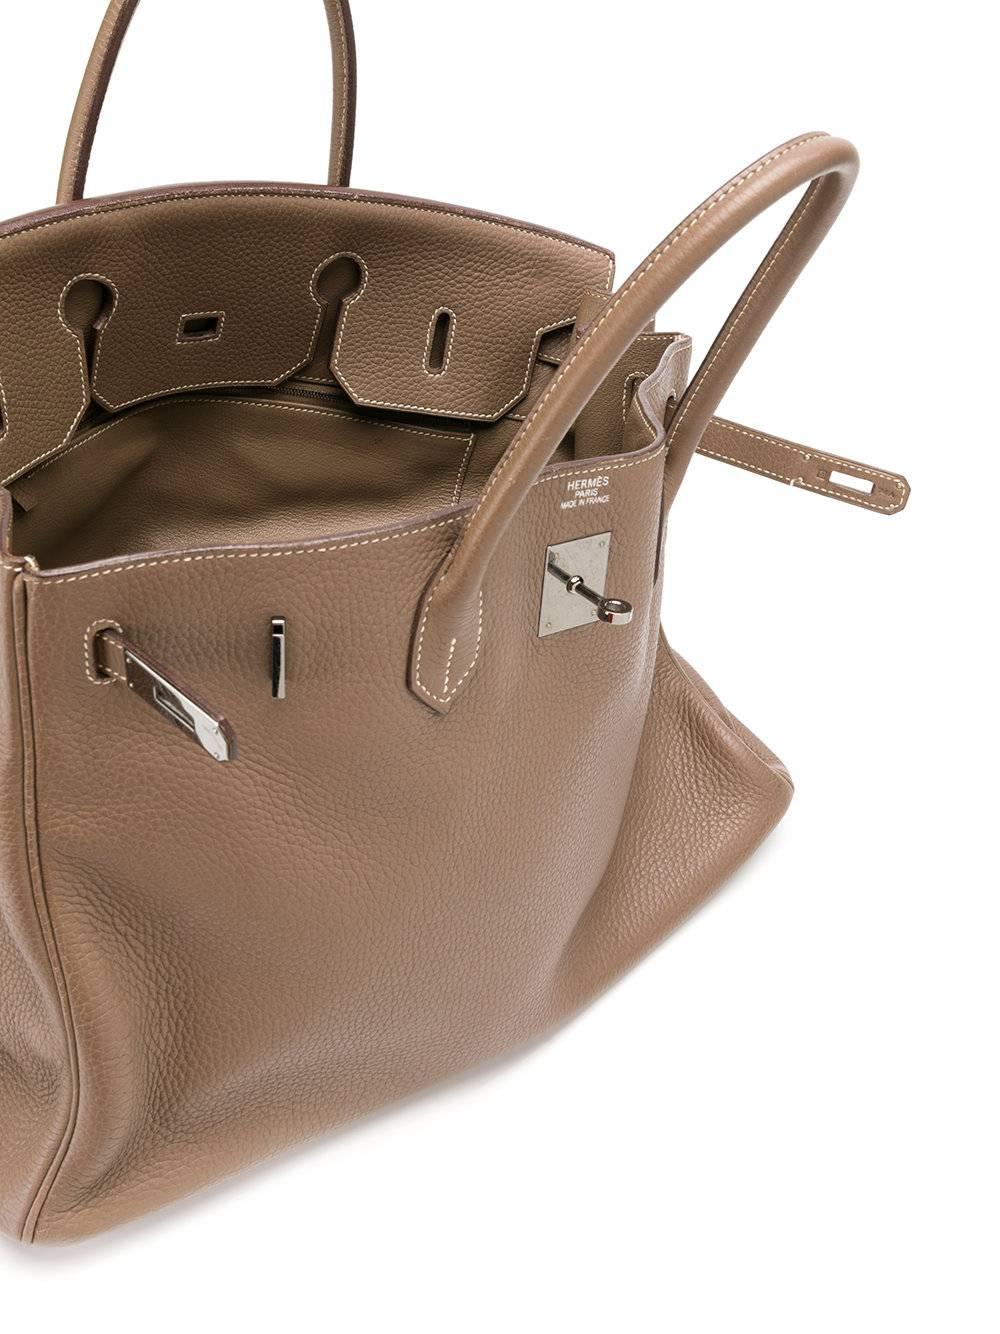 Hermès Etoupe 40cm Birkin Bag In Good Condition In London, GB